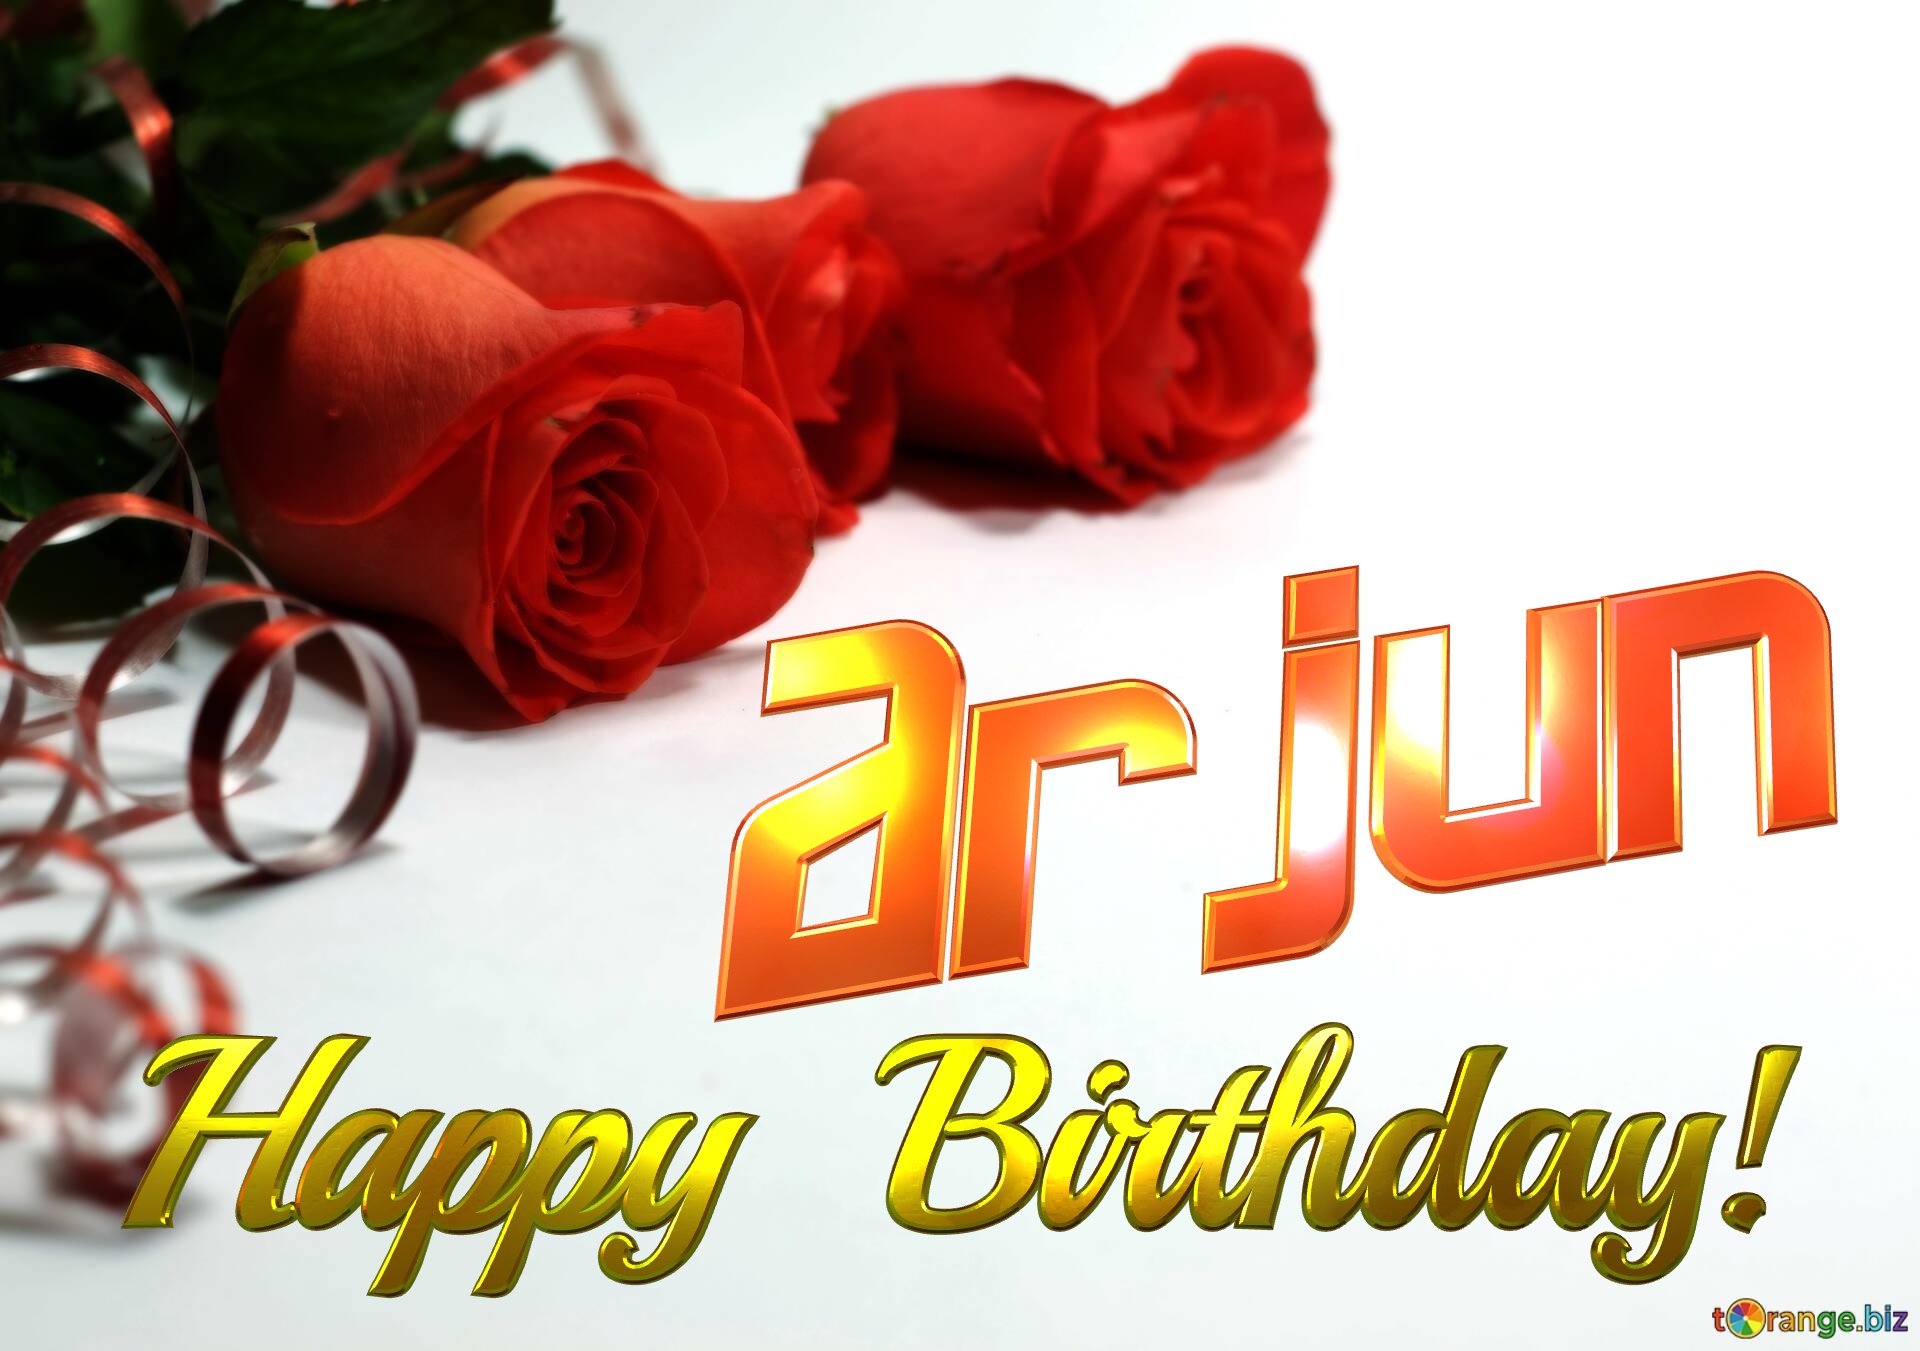 Arjun   Birthday   Wishes background №0